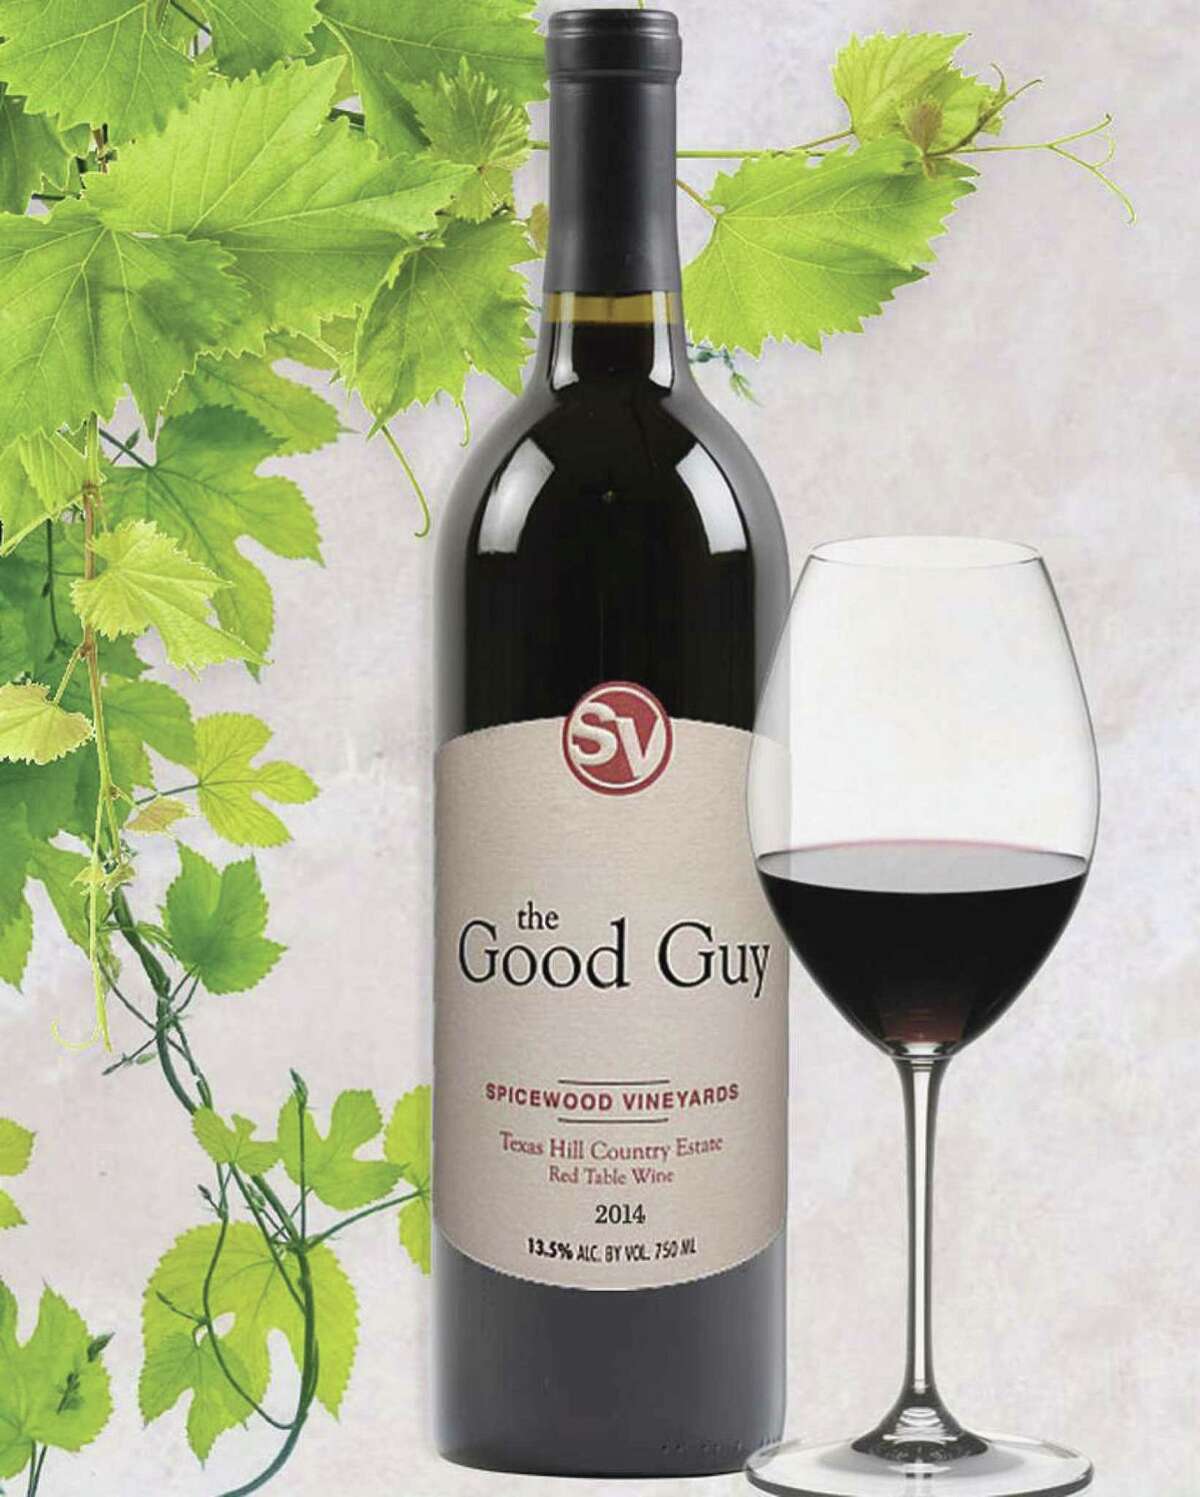 Spicewood Vineyards Good Guy 2014